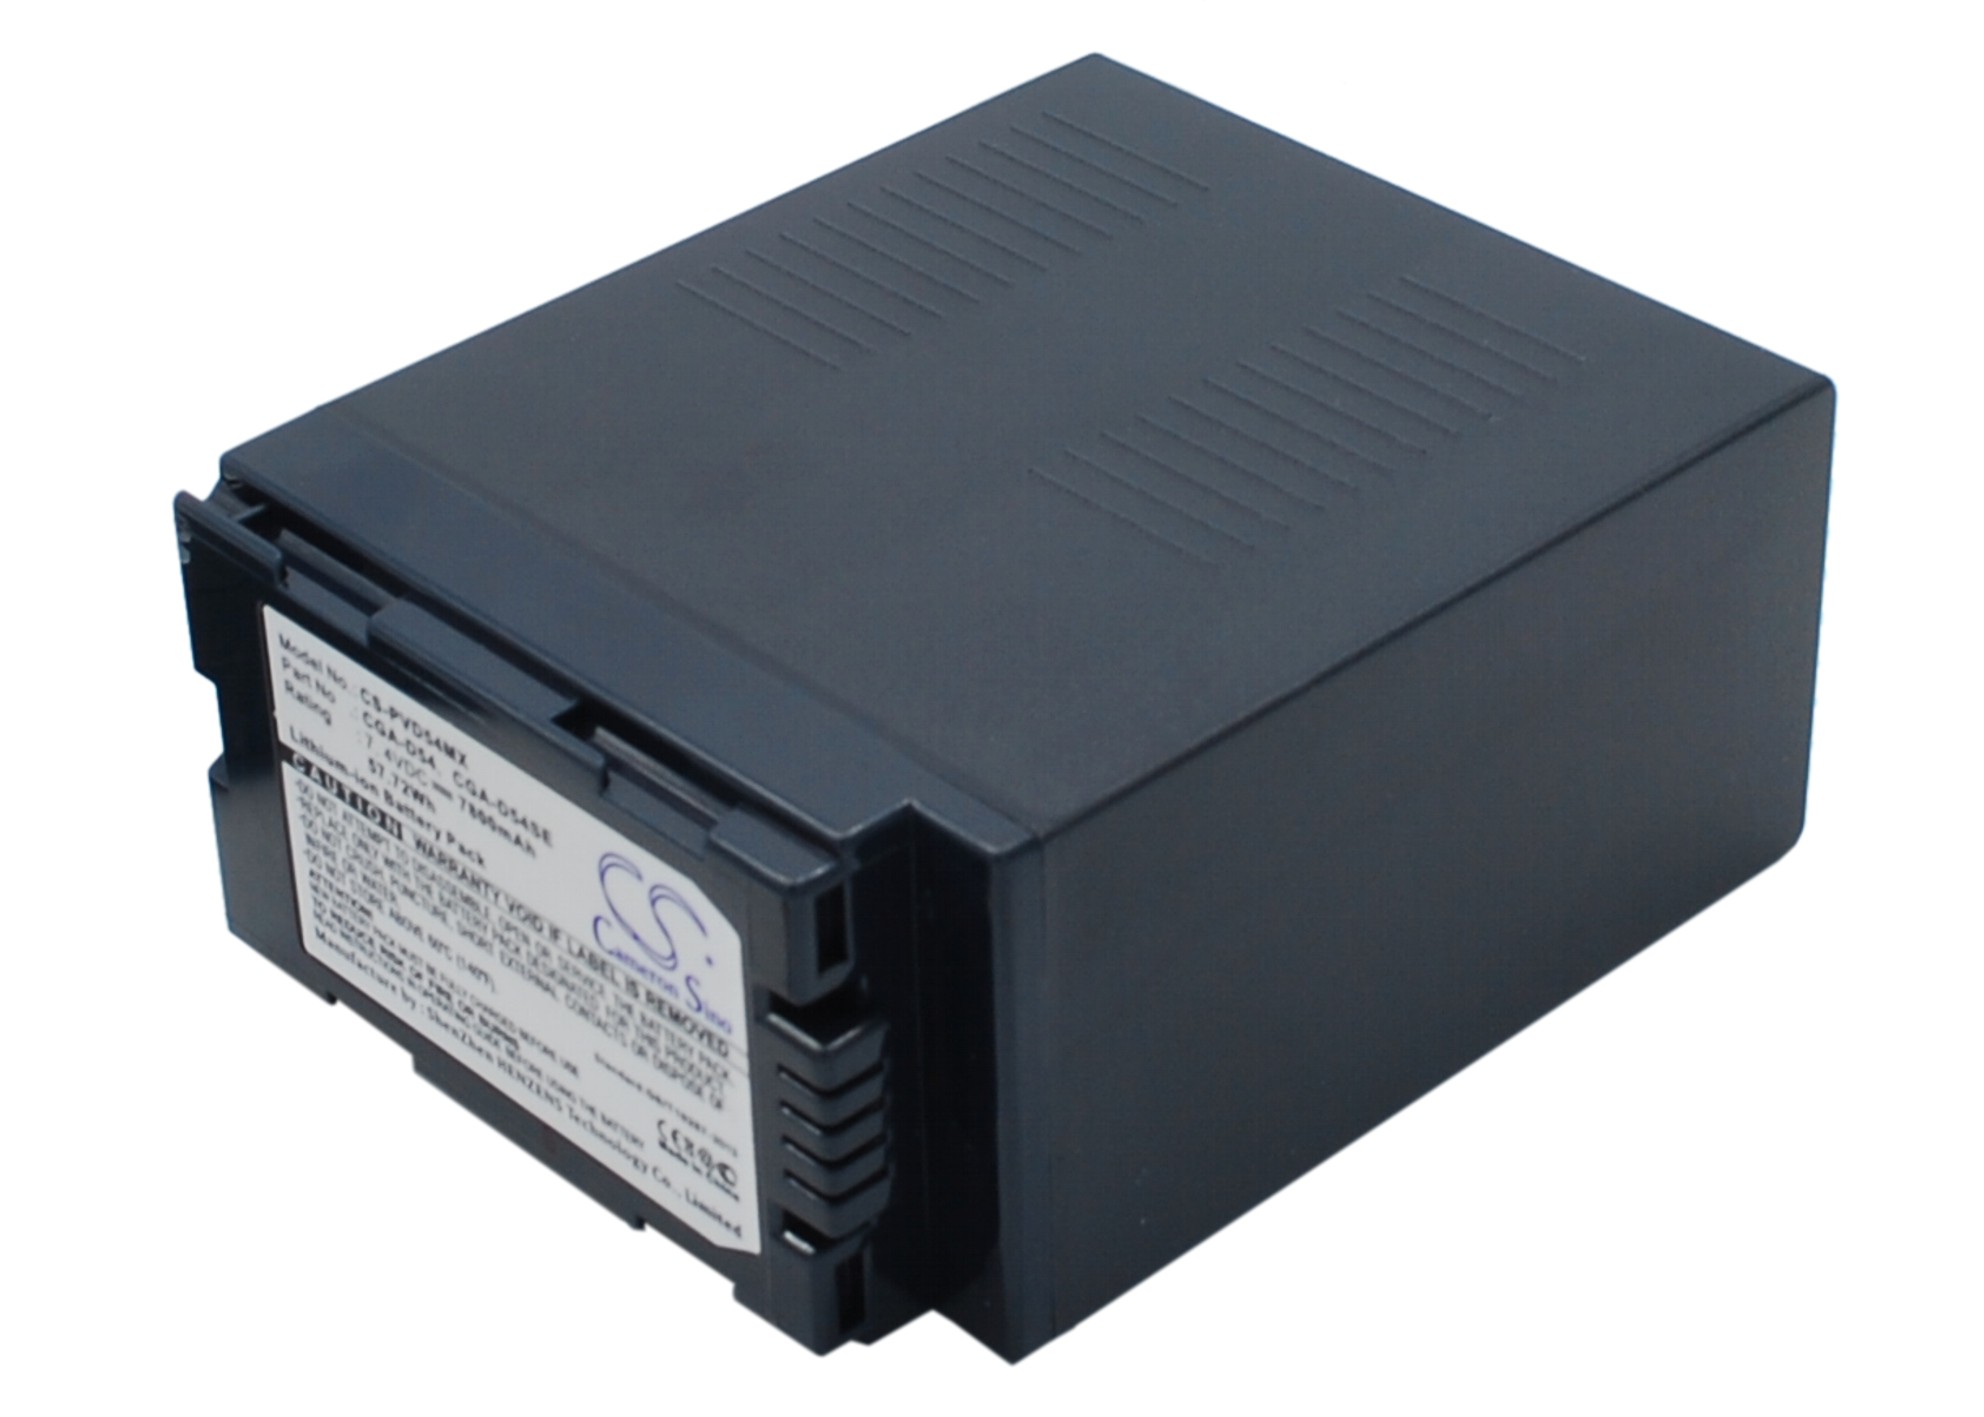 Cameron Sino Battery for Panasonic AG-DVC30 CGA-D54 CGA-D54S D54SE CGR-D54S VW-VBD55 7800mAh